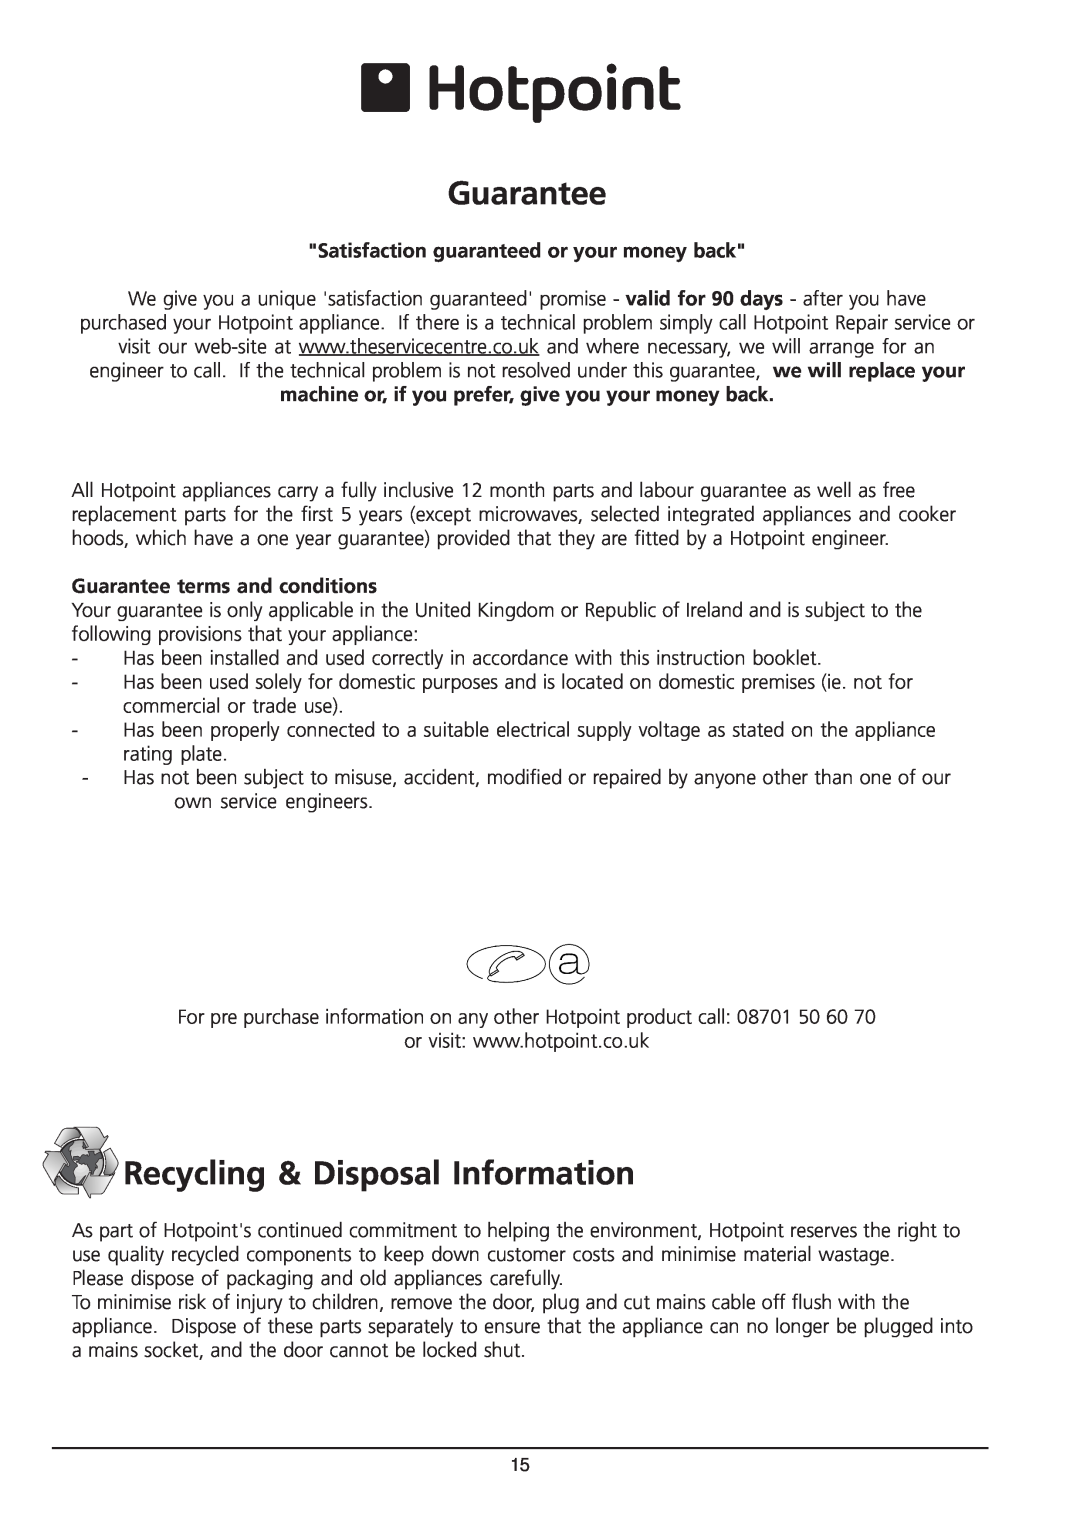 Hotpoint RSA 21 manual Guarantee, Recycling & Disposal Information, Satisfaction guaranteed or your money back 